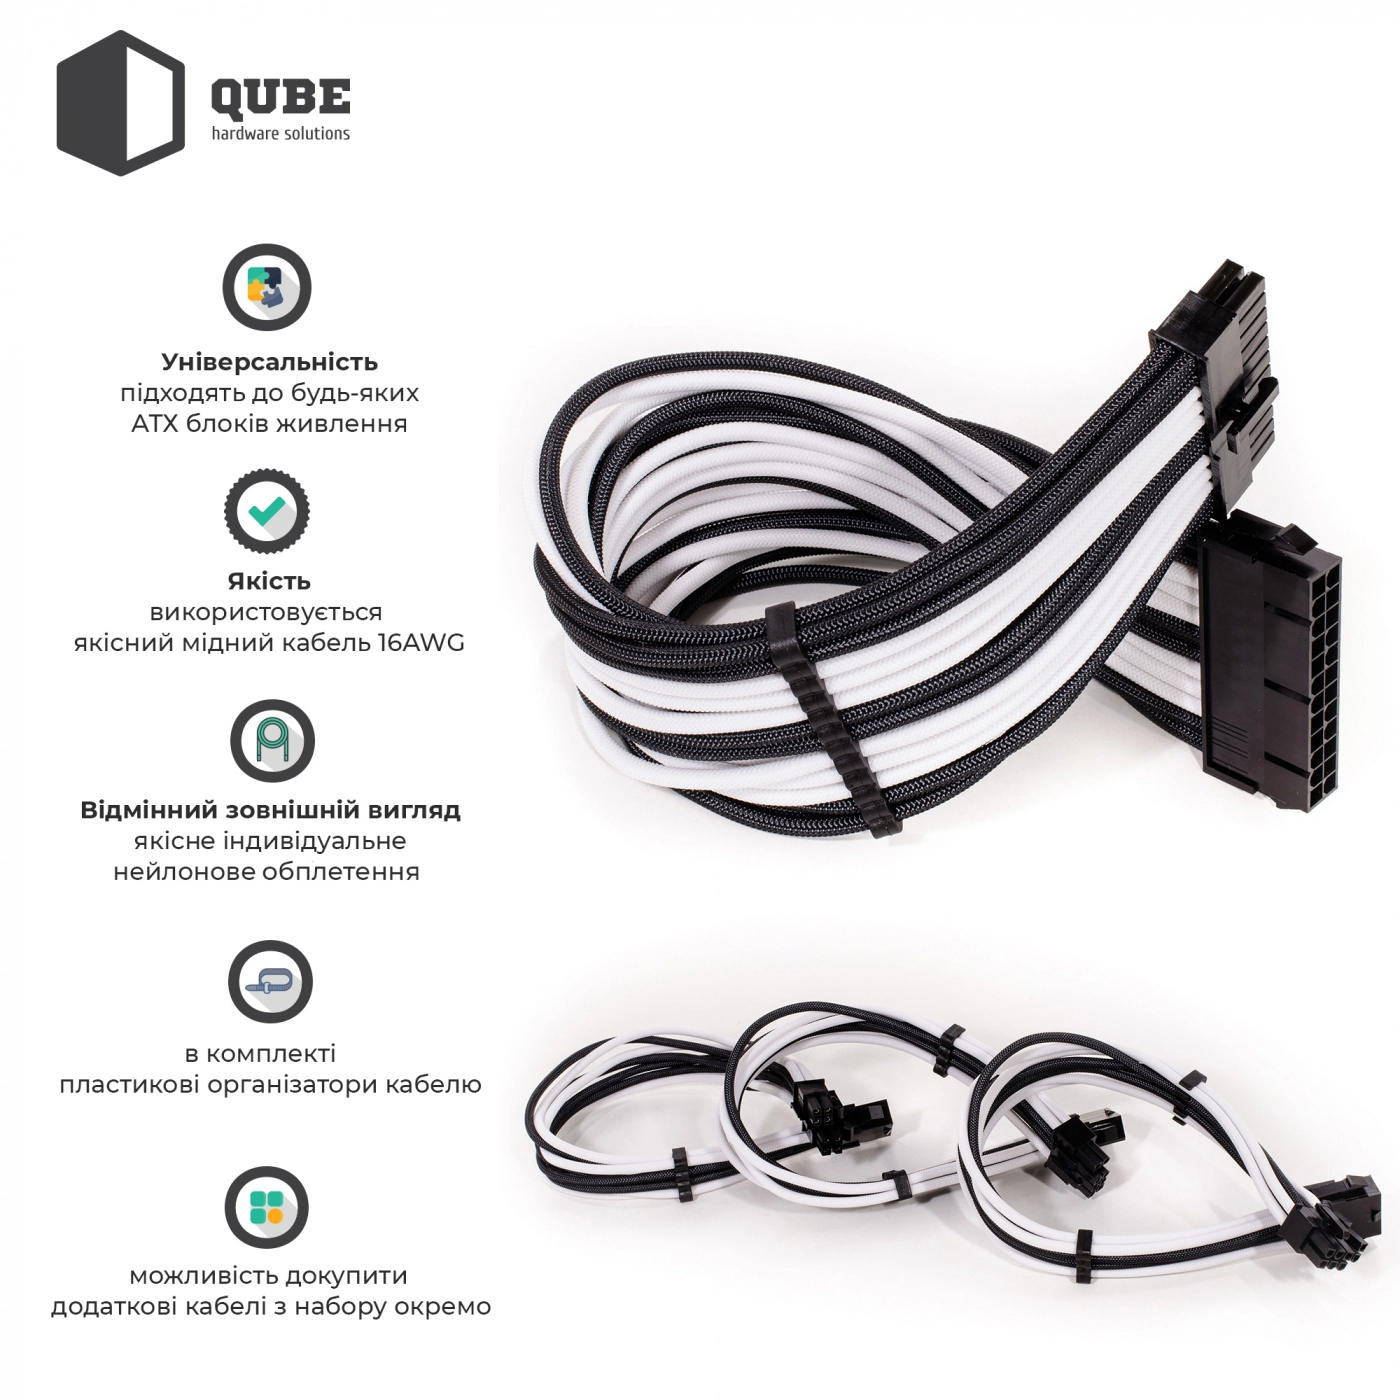 Купить Набор кабелей для блока питания QUBE 1x24P MB, 2x4+4P CPU, 2x6+2P VGA Black-White - фото 2